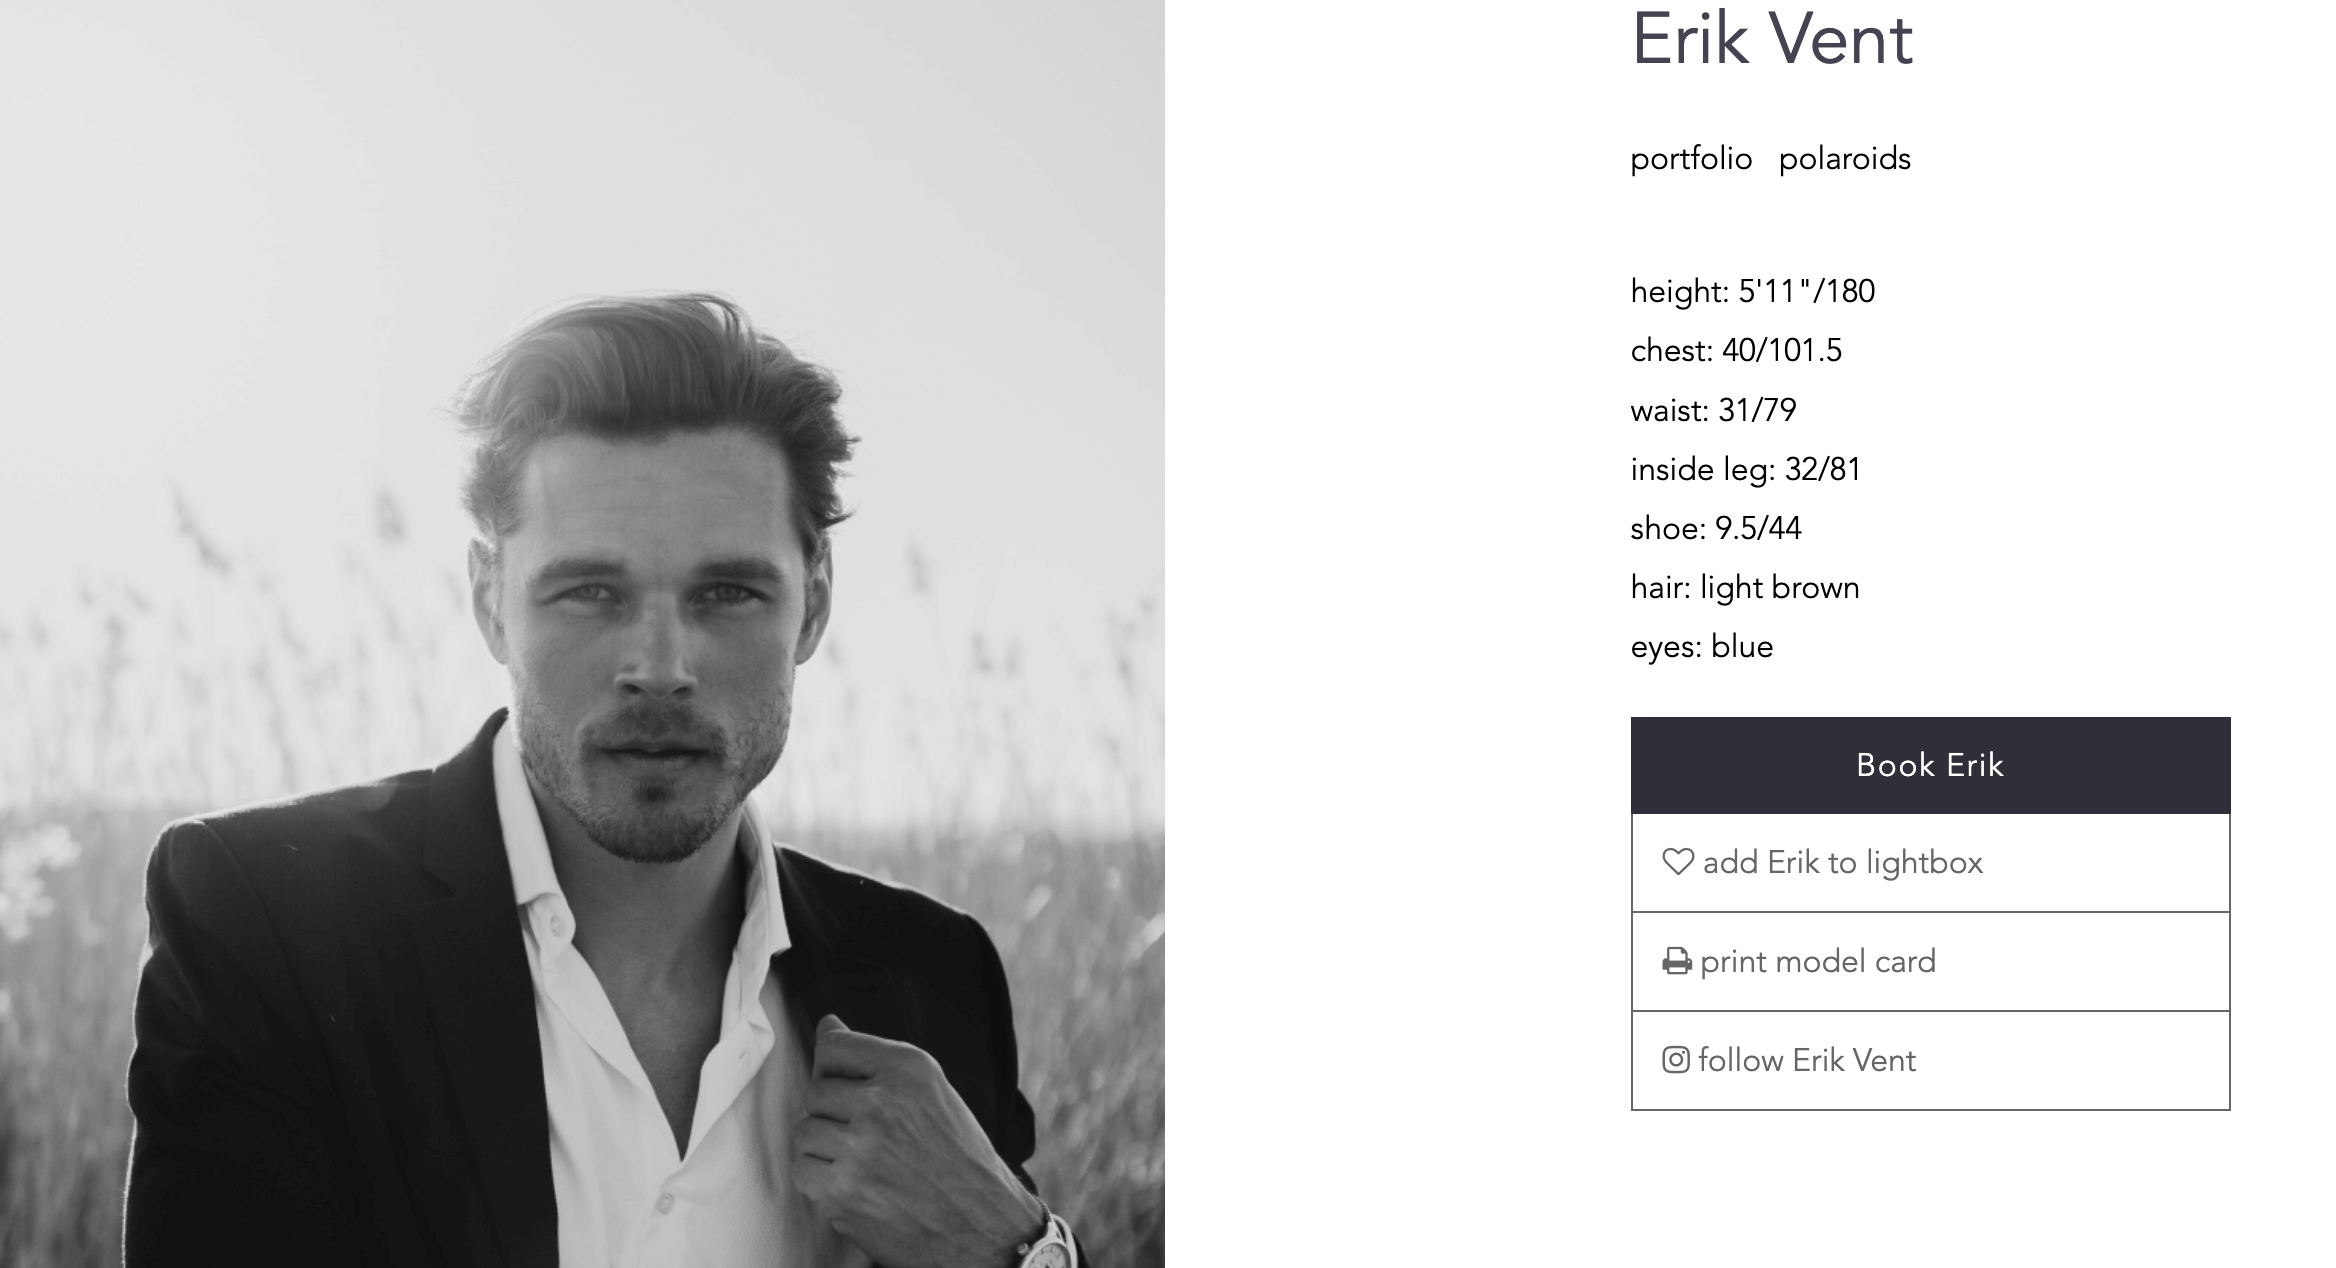 Erik Vent's homepage